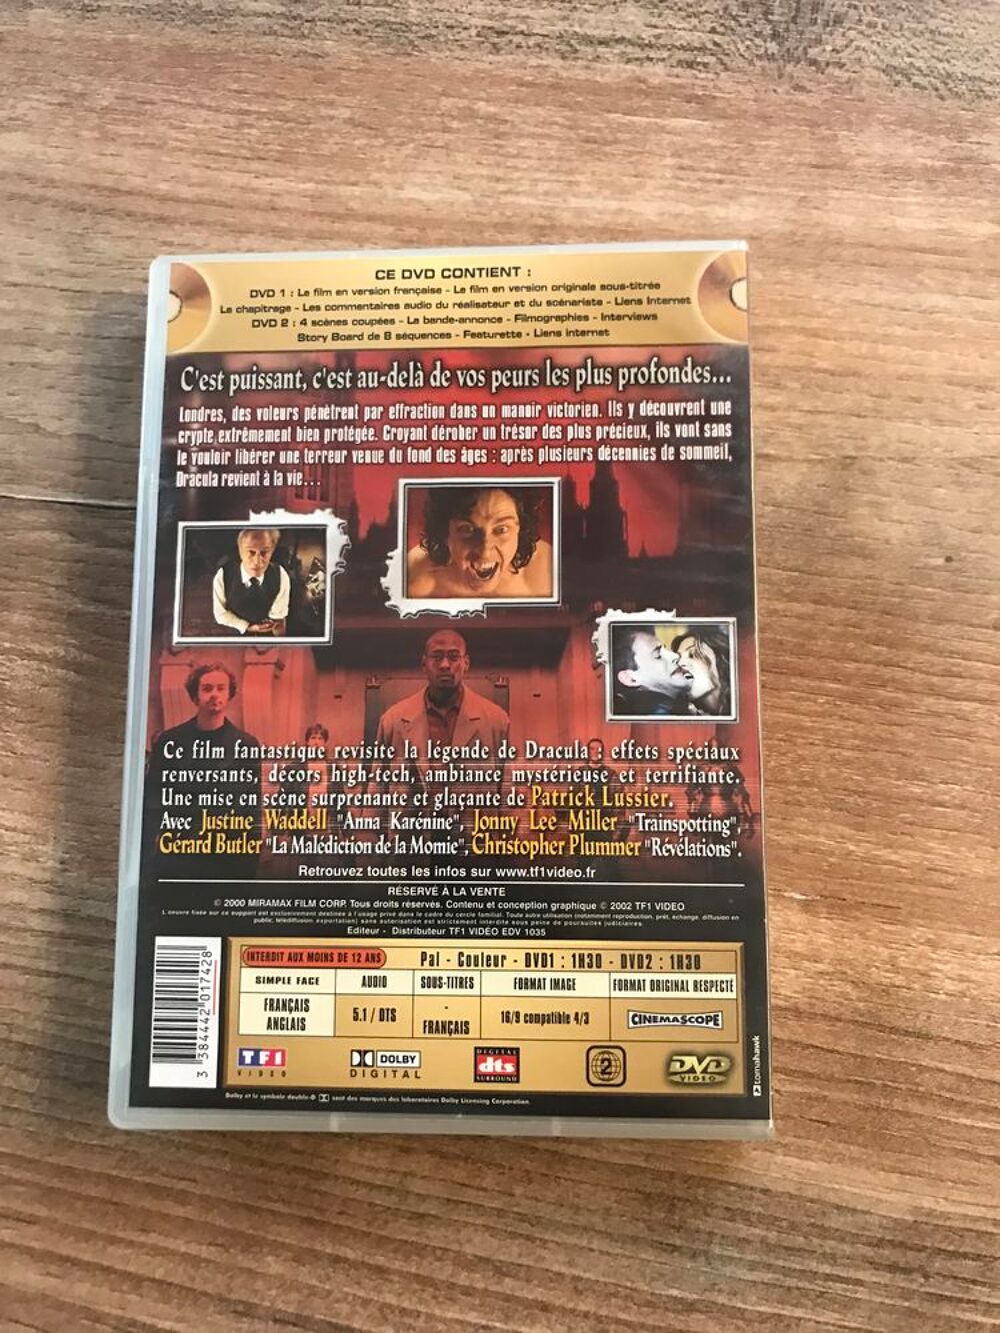 DVD &quot; Dracula 2001 &quot; DVD et blu-ray